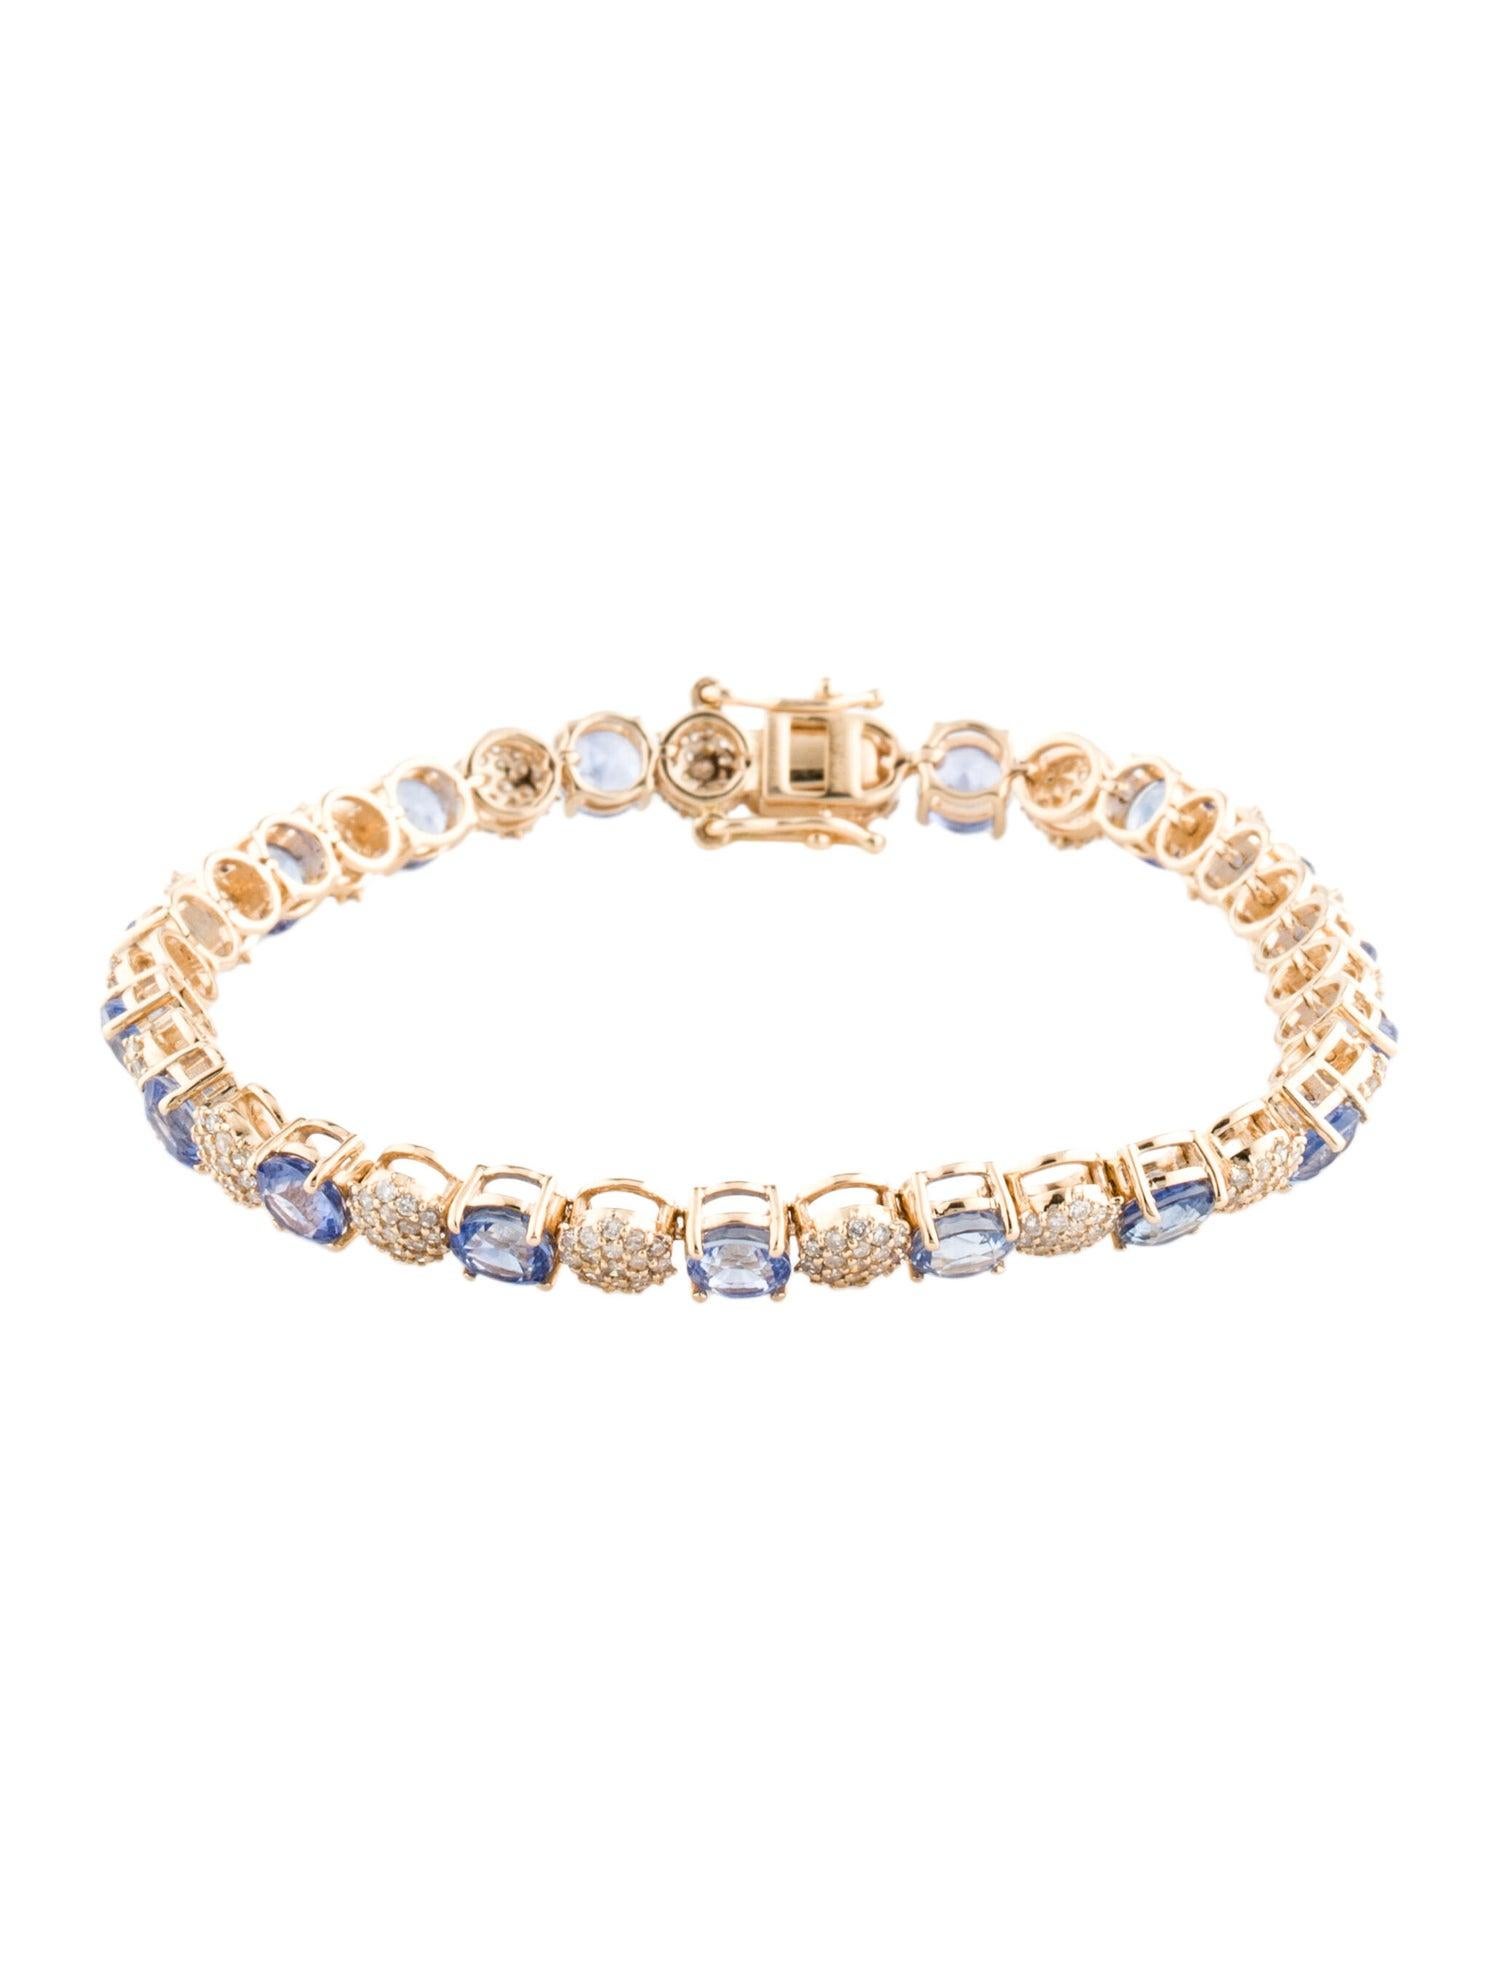 14K Sapphire & Diamond Tennis Bracelet - Elegant Sparkle, Timeless Glamour In New Condition For Sale In Holtsville, NY